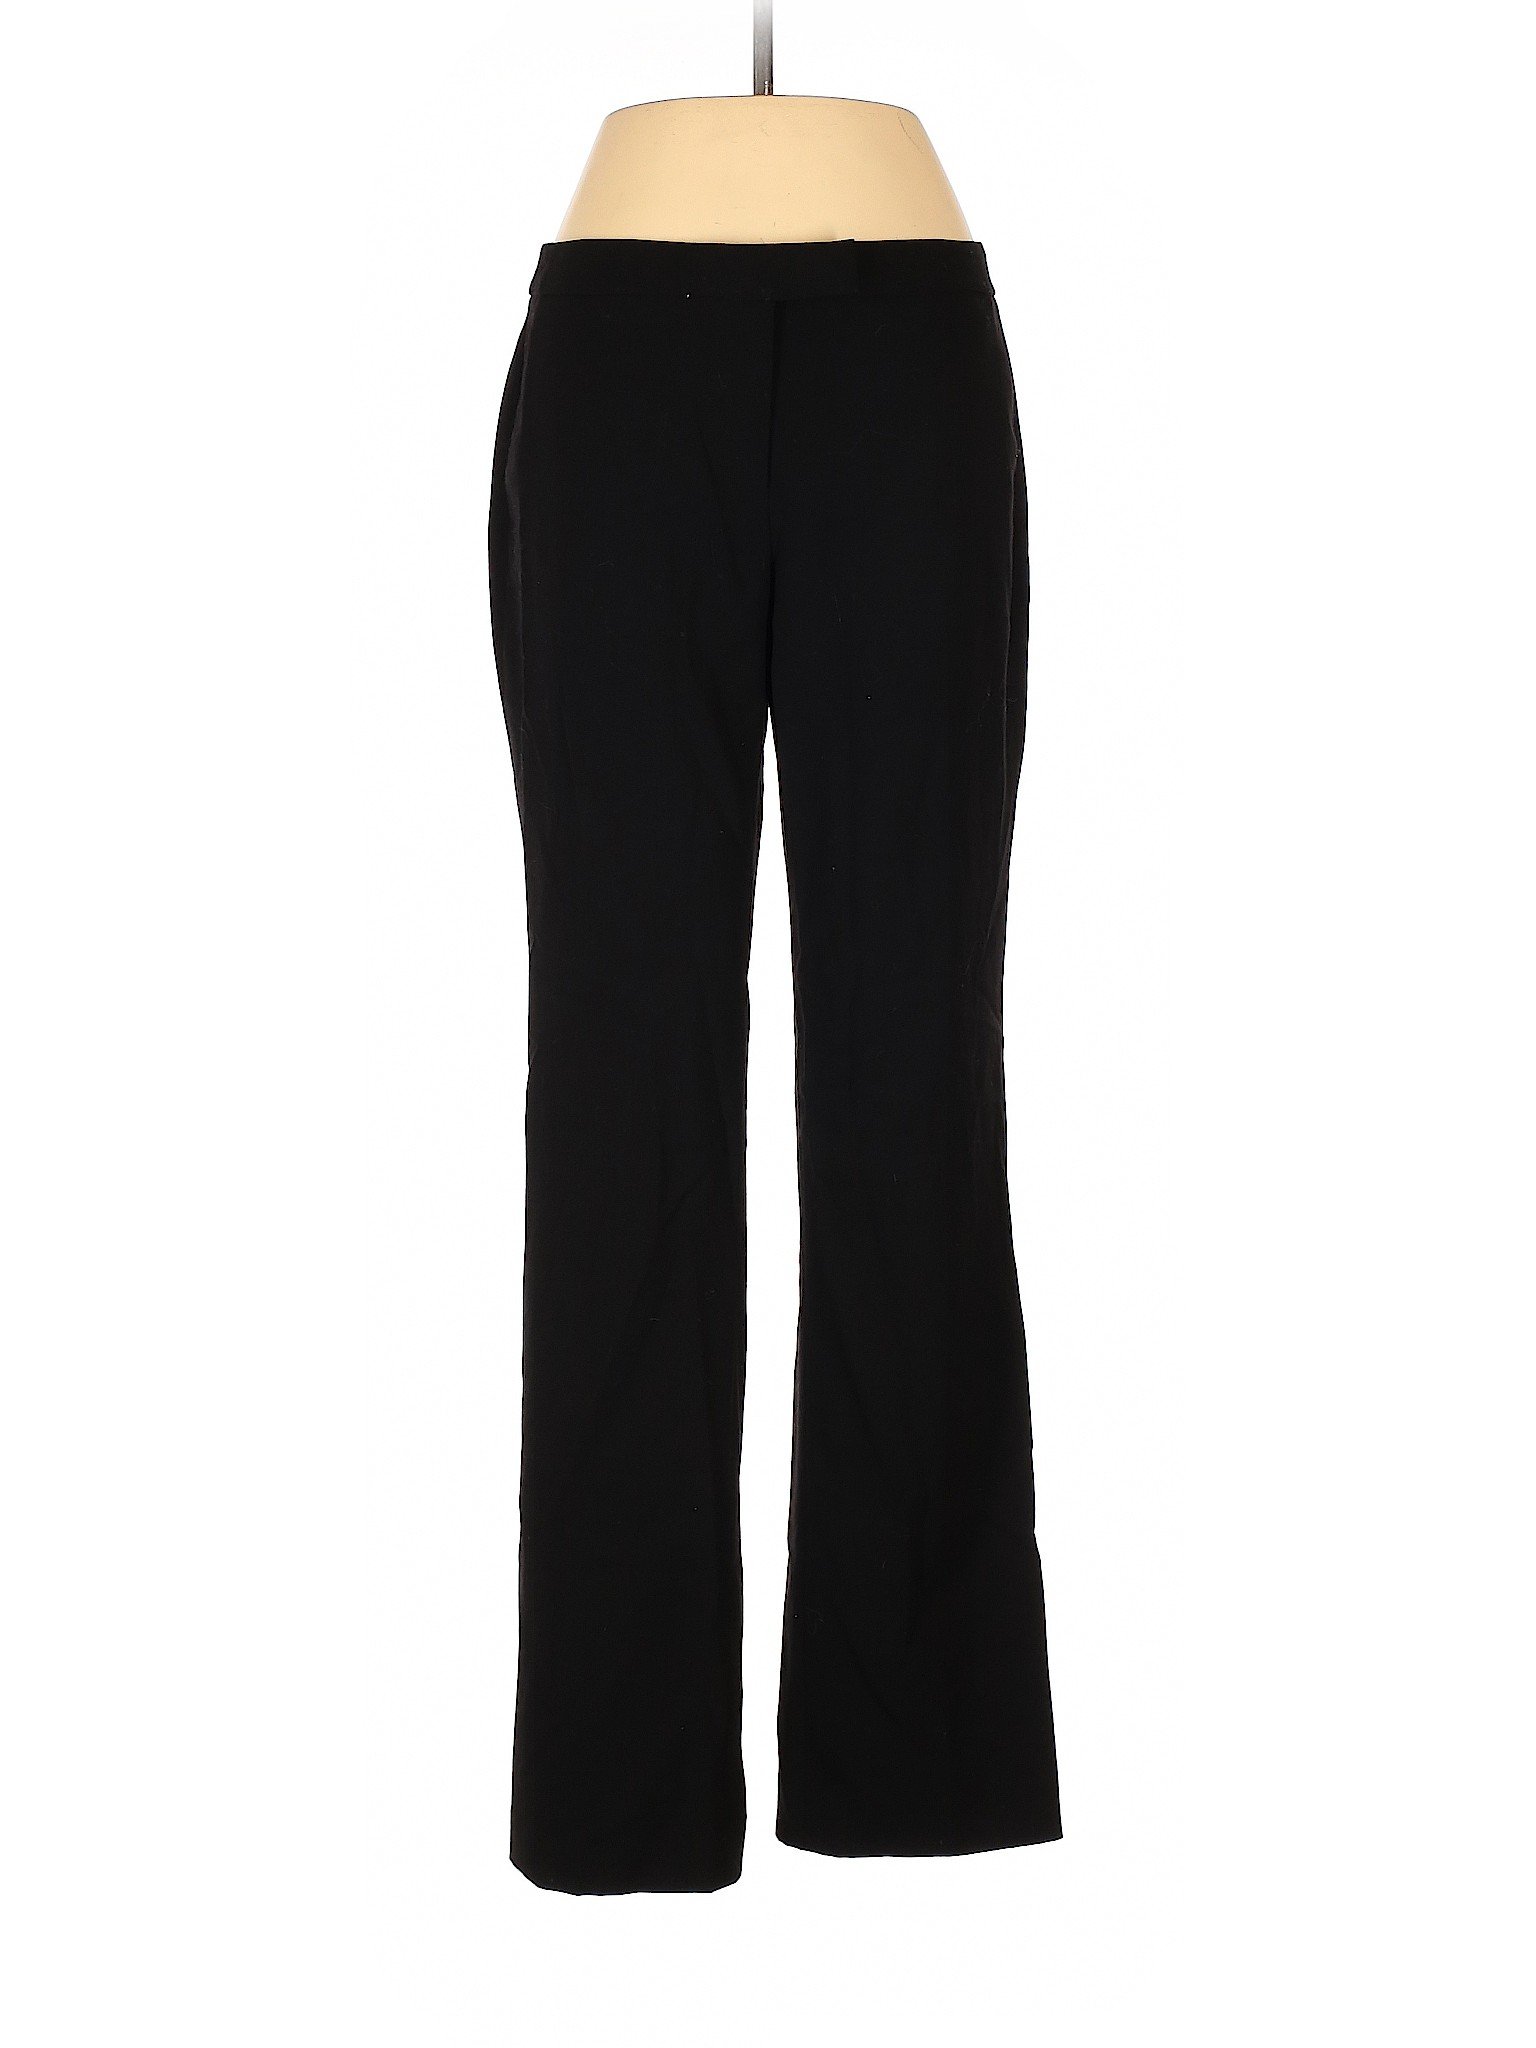 Karl Lagerfeld Women Black Dress Pants 4 | eBay